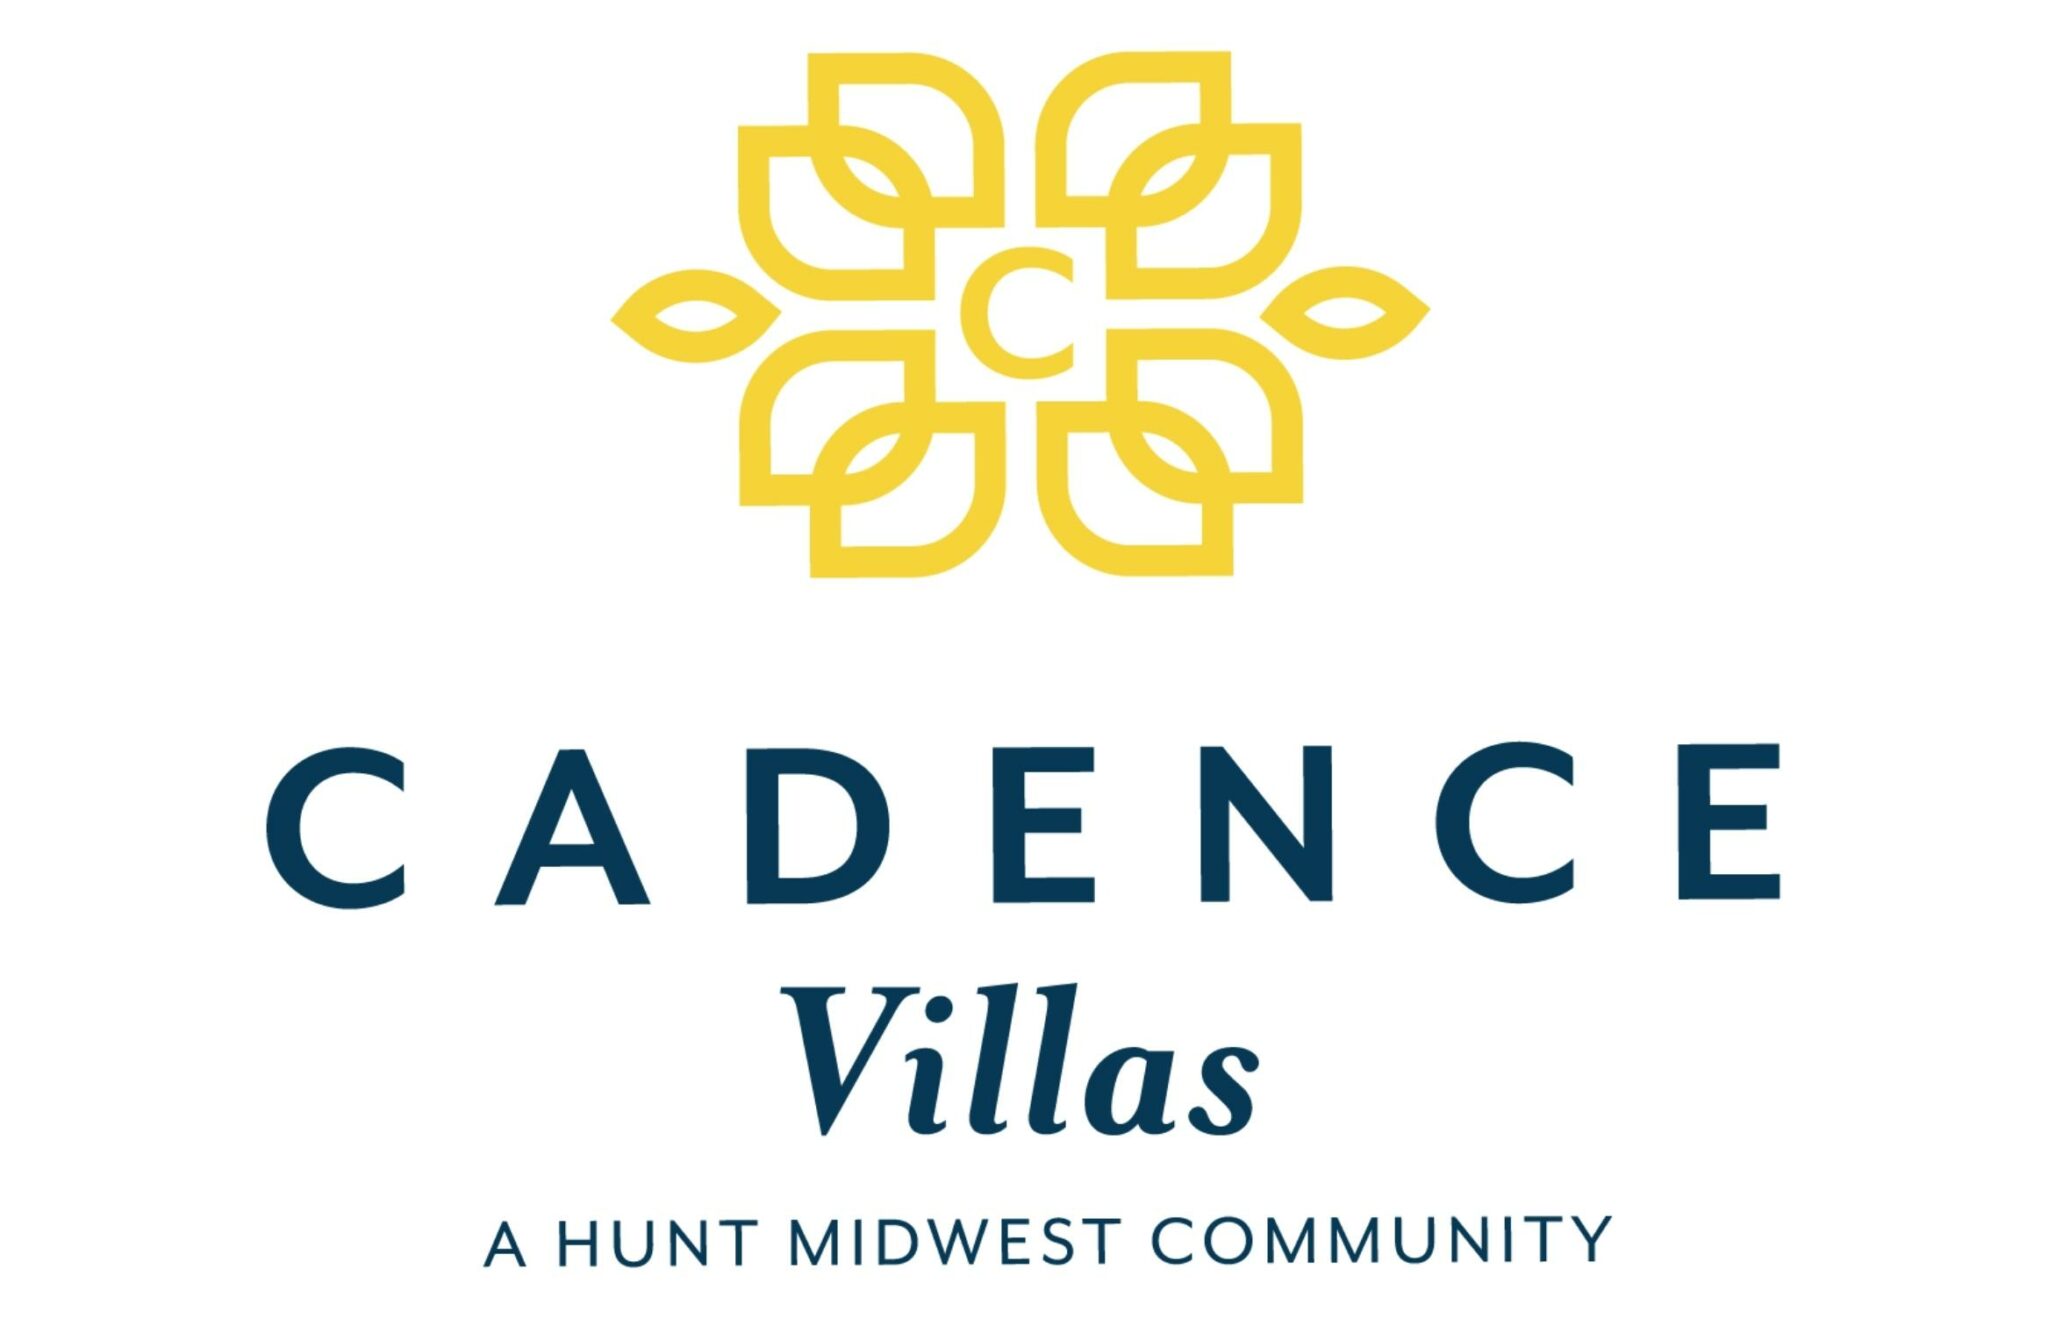 Cadence Villas maintenance provided new home community Kansas City Northland